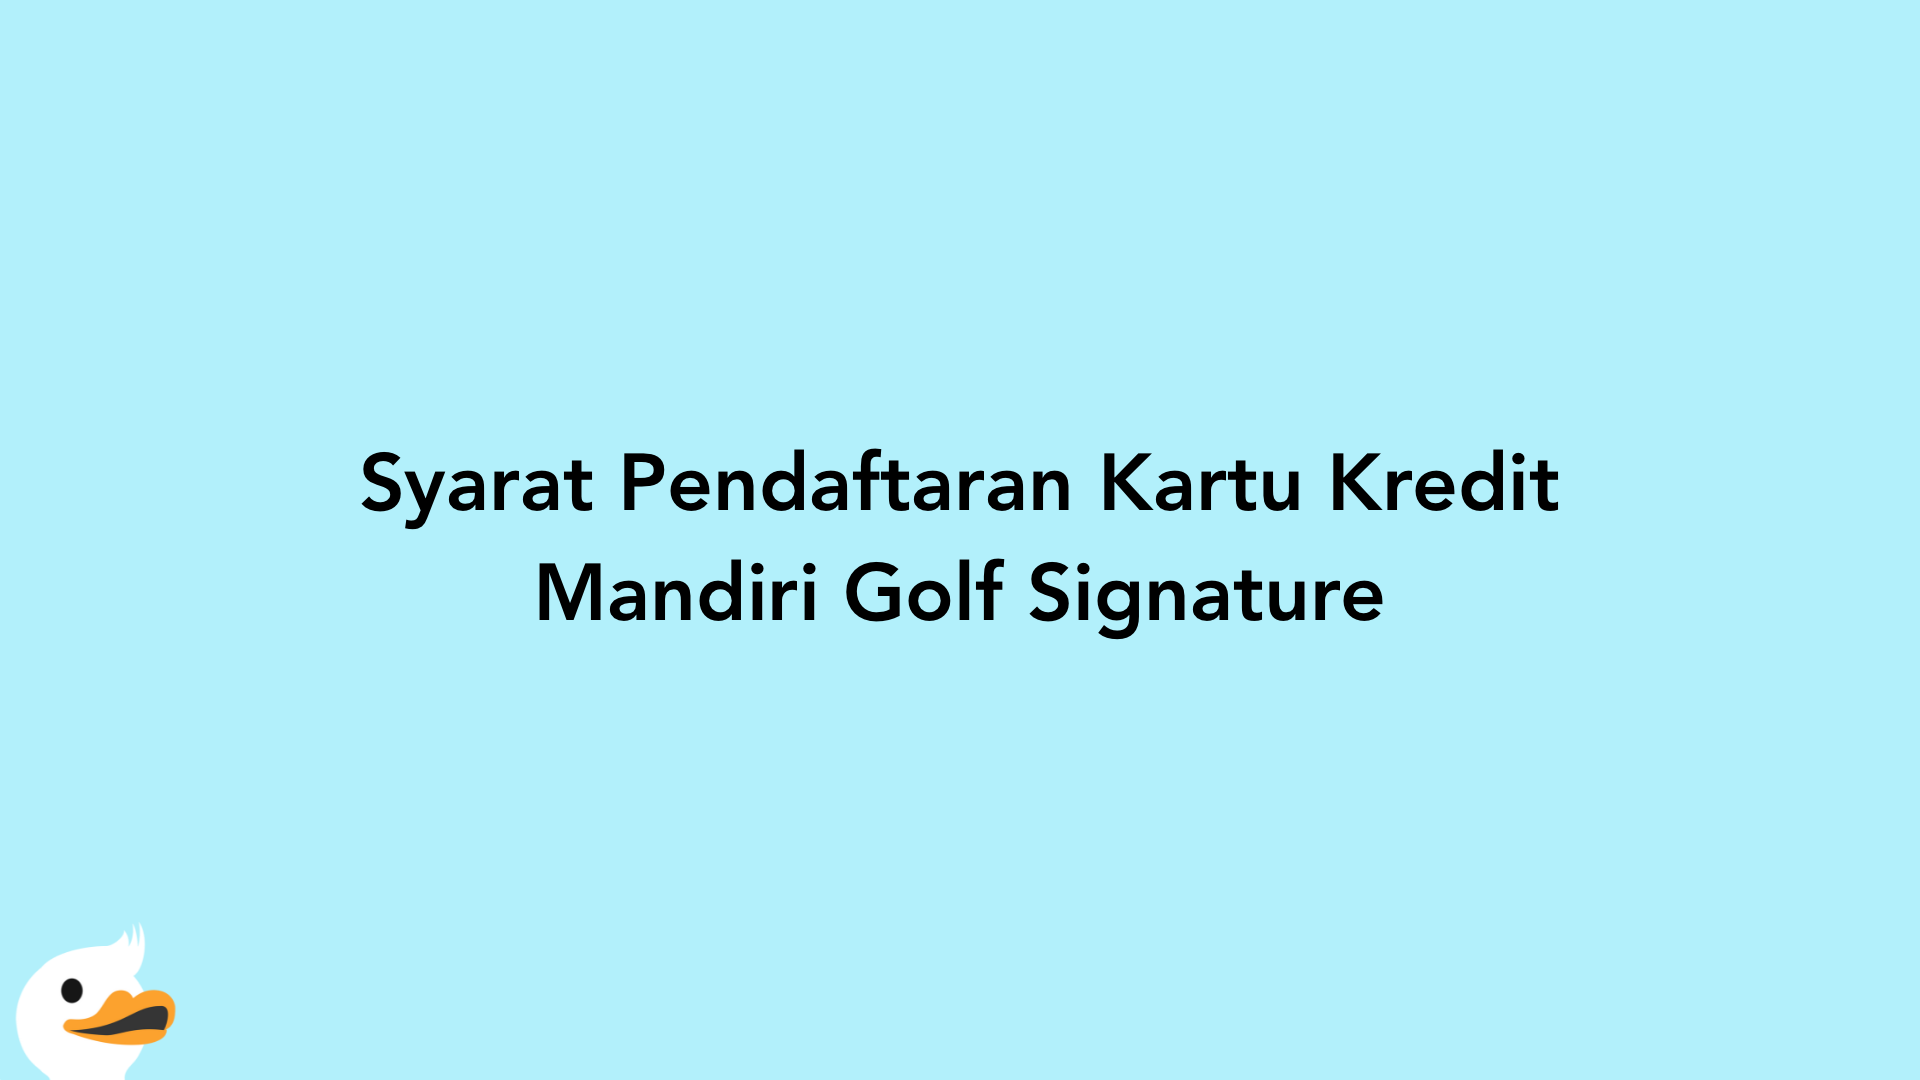 Syarat Pendaftaran Kartu Kredit Mandiri Golf Signature